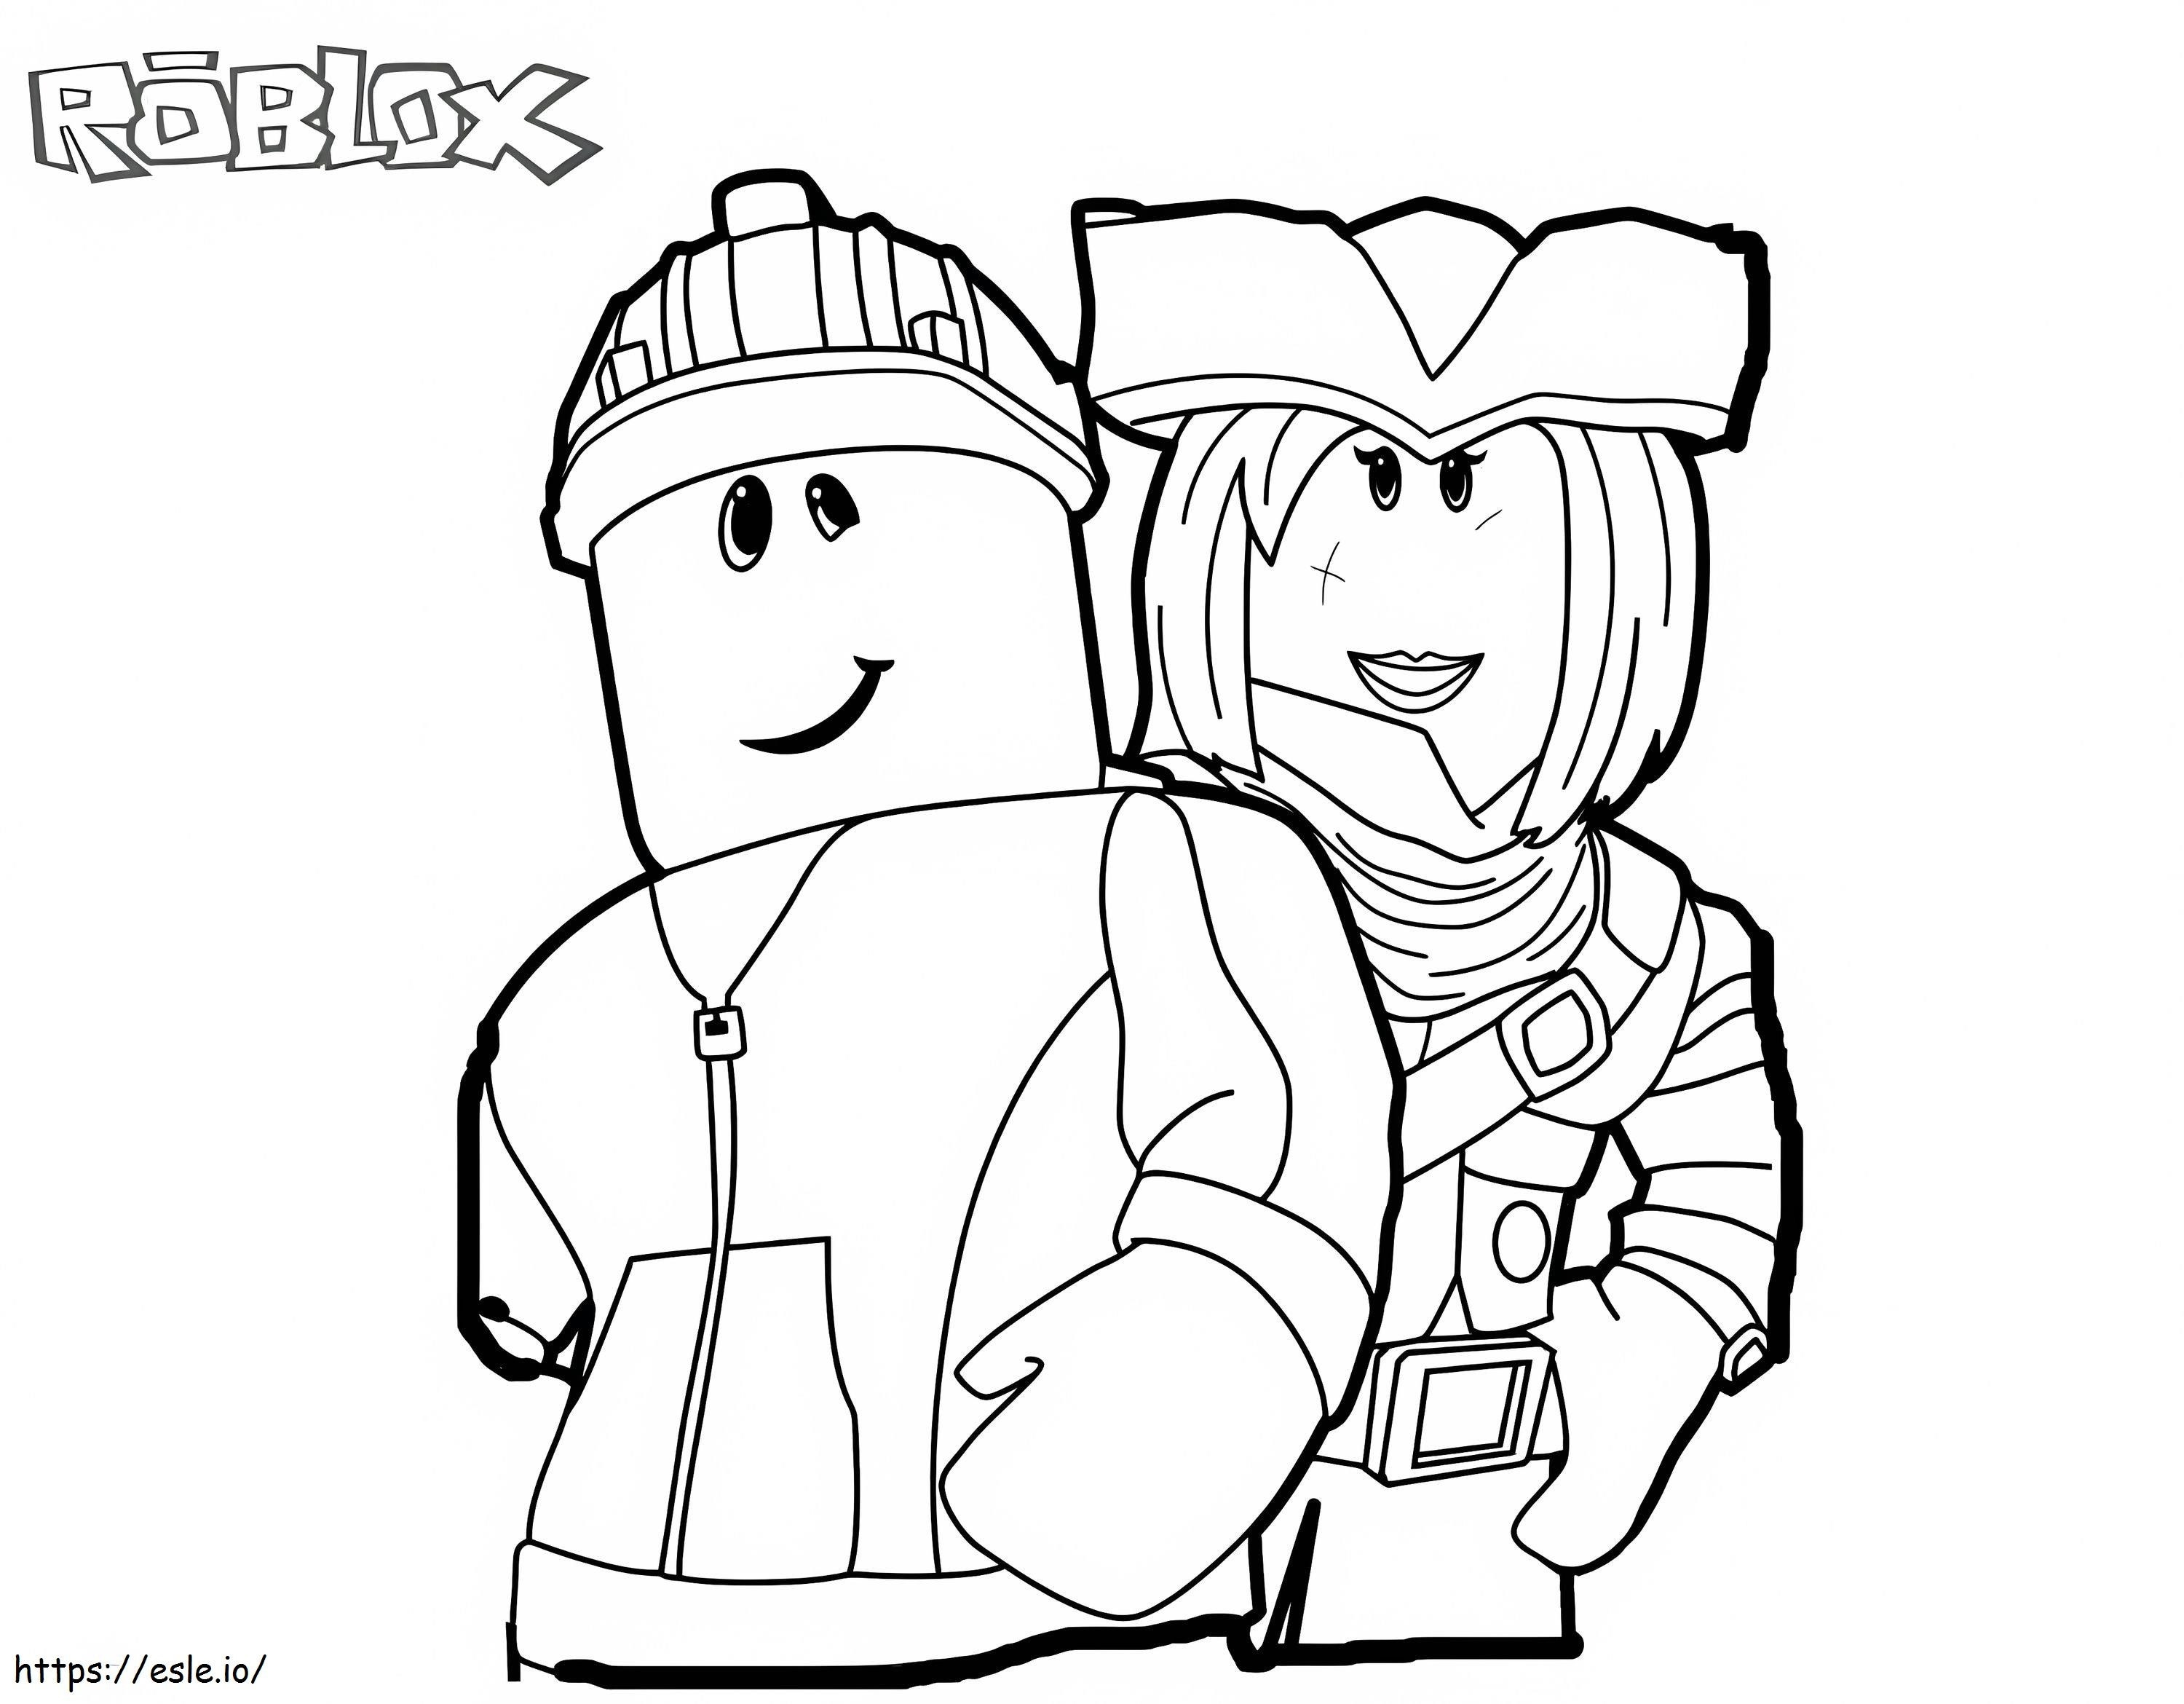 İki Karakterli Roblox boyama